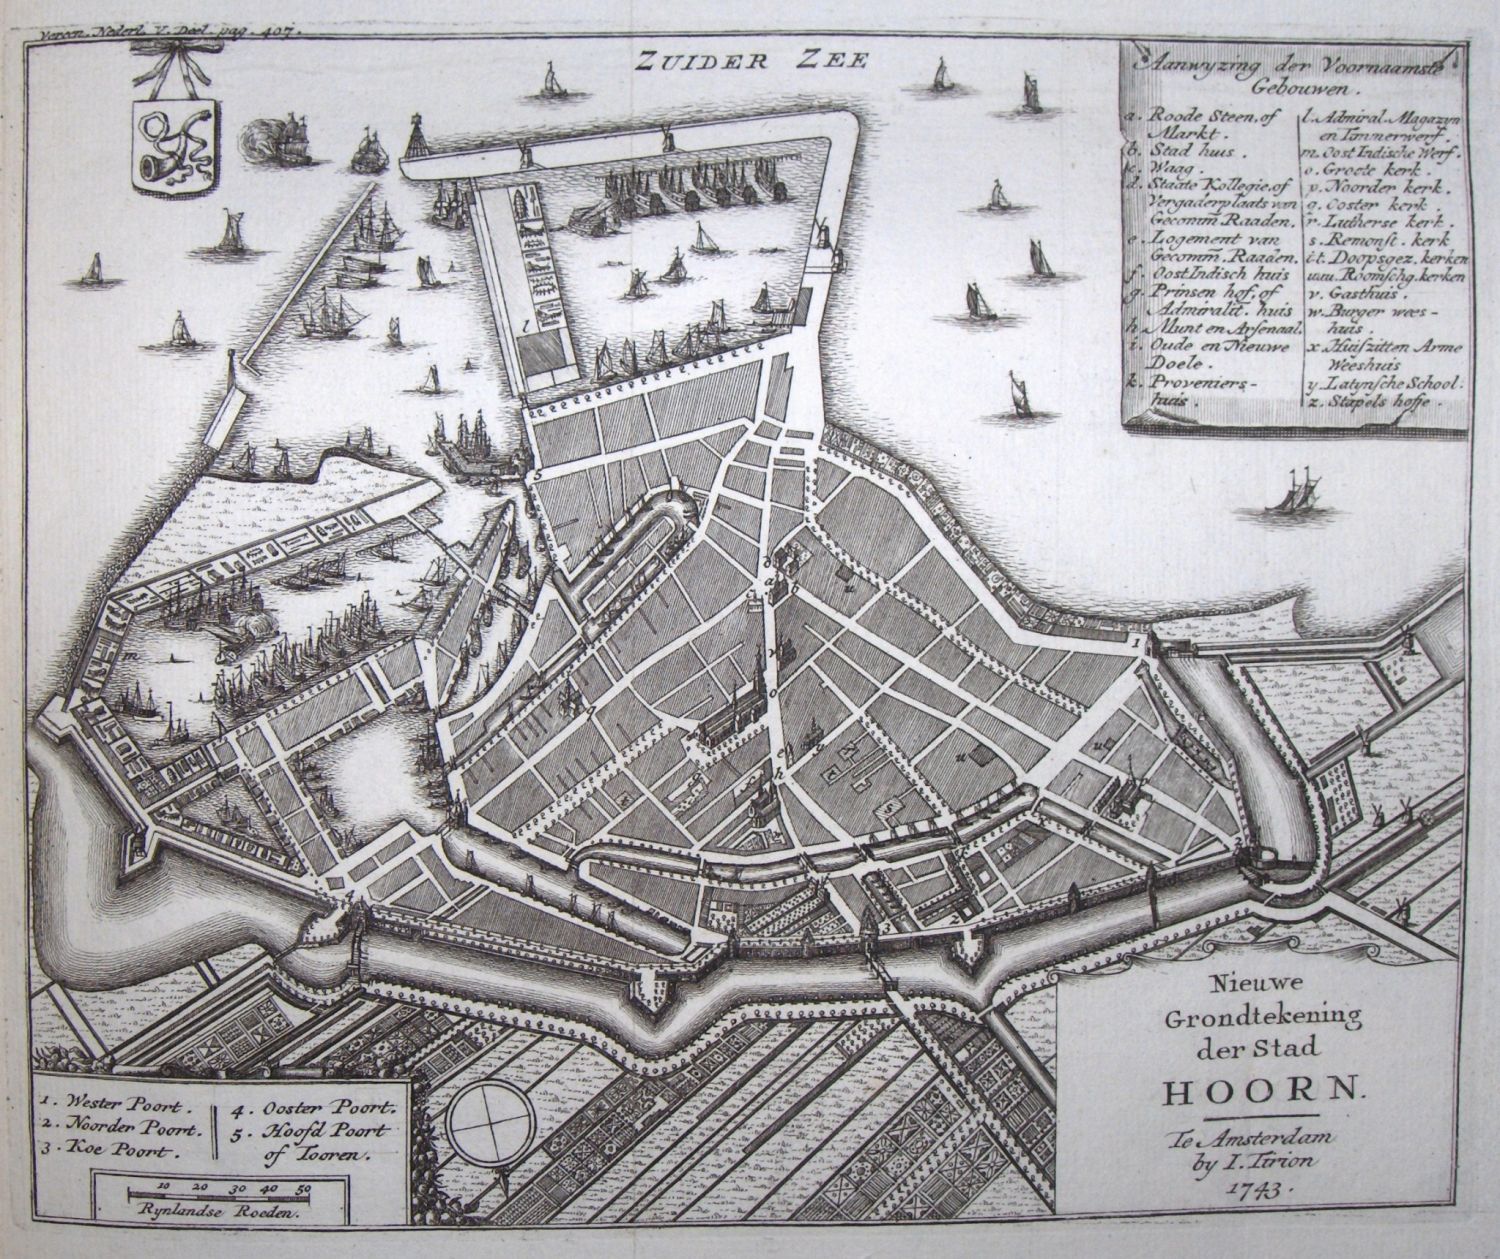 Hoorn Tirion 1743